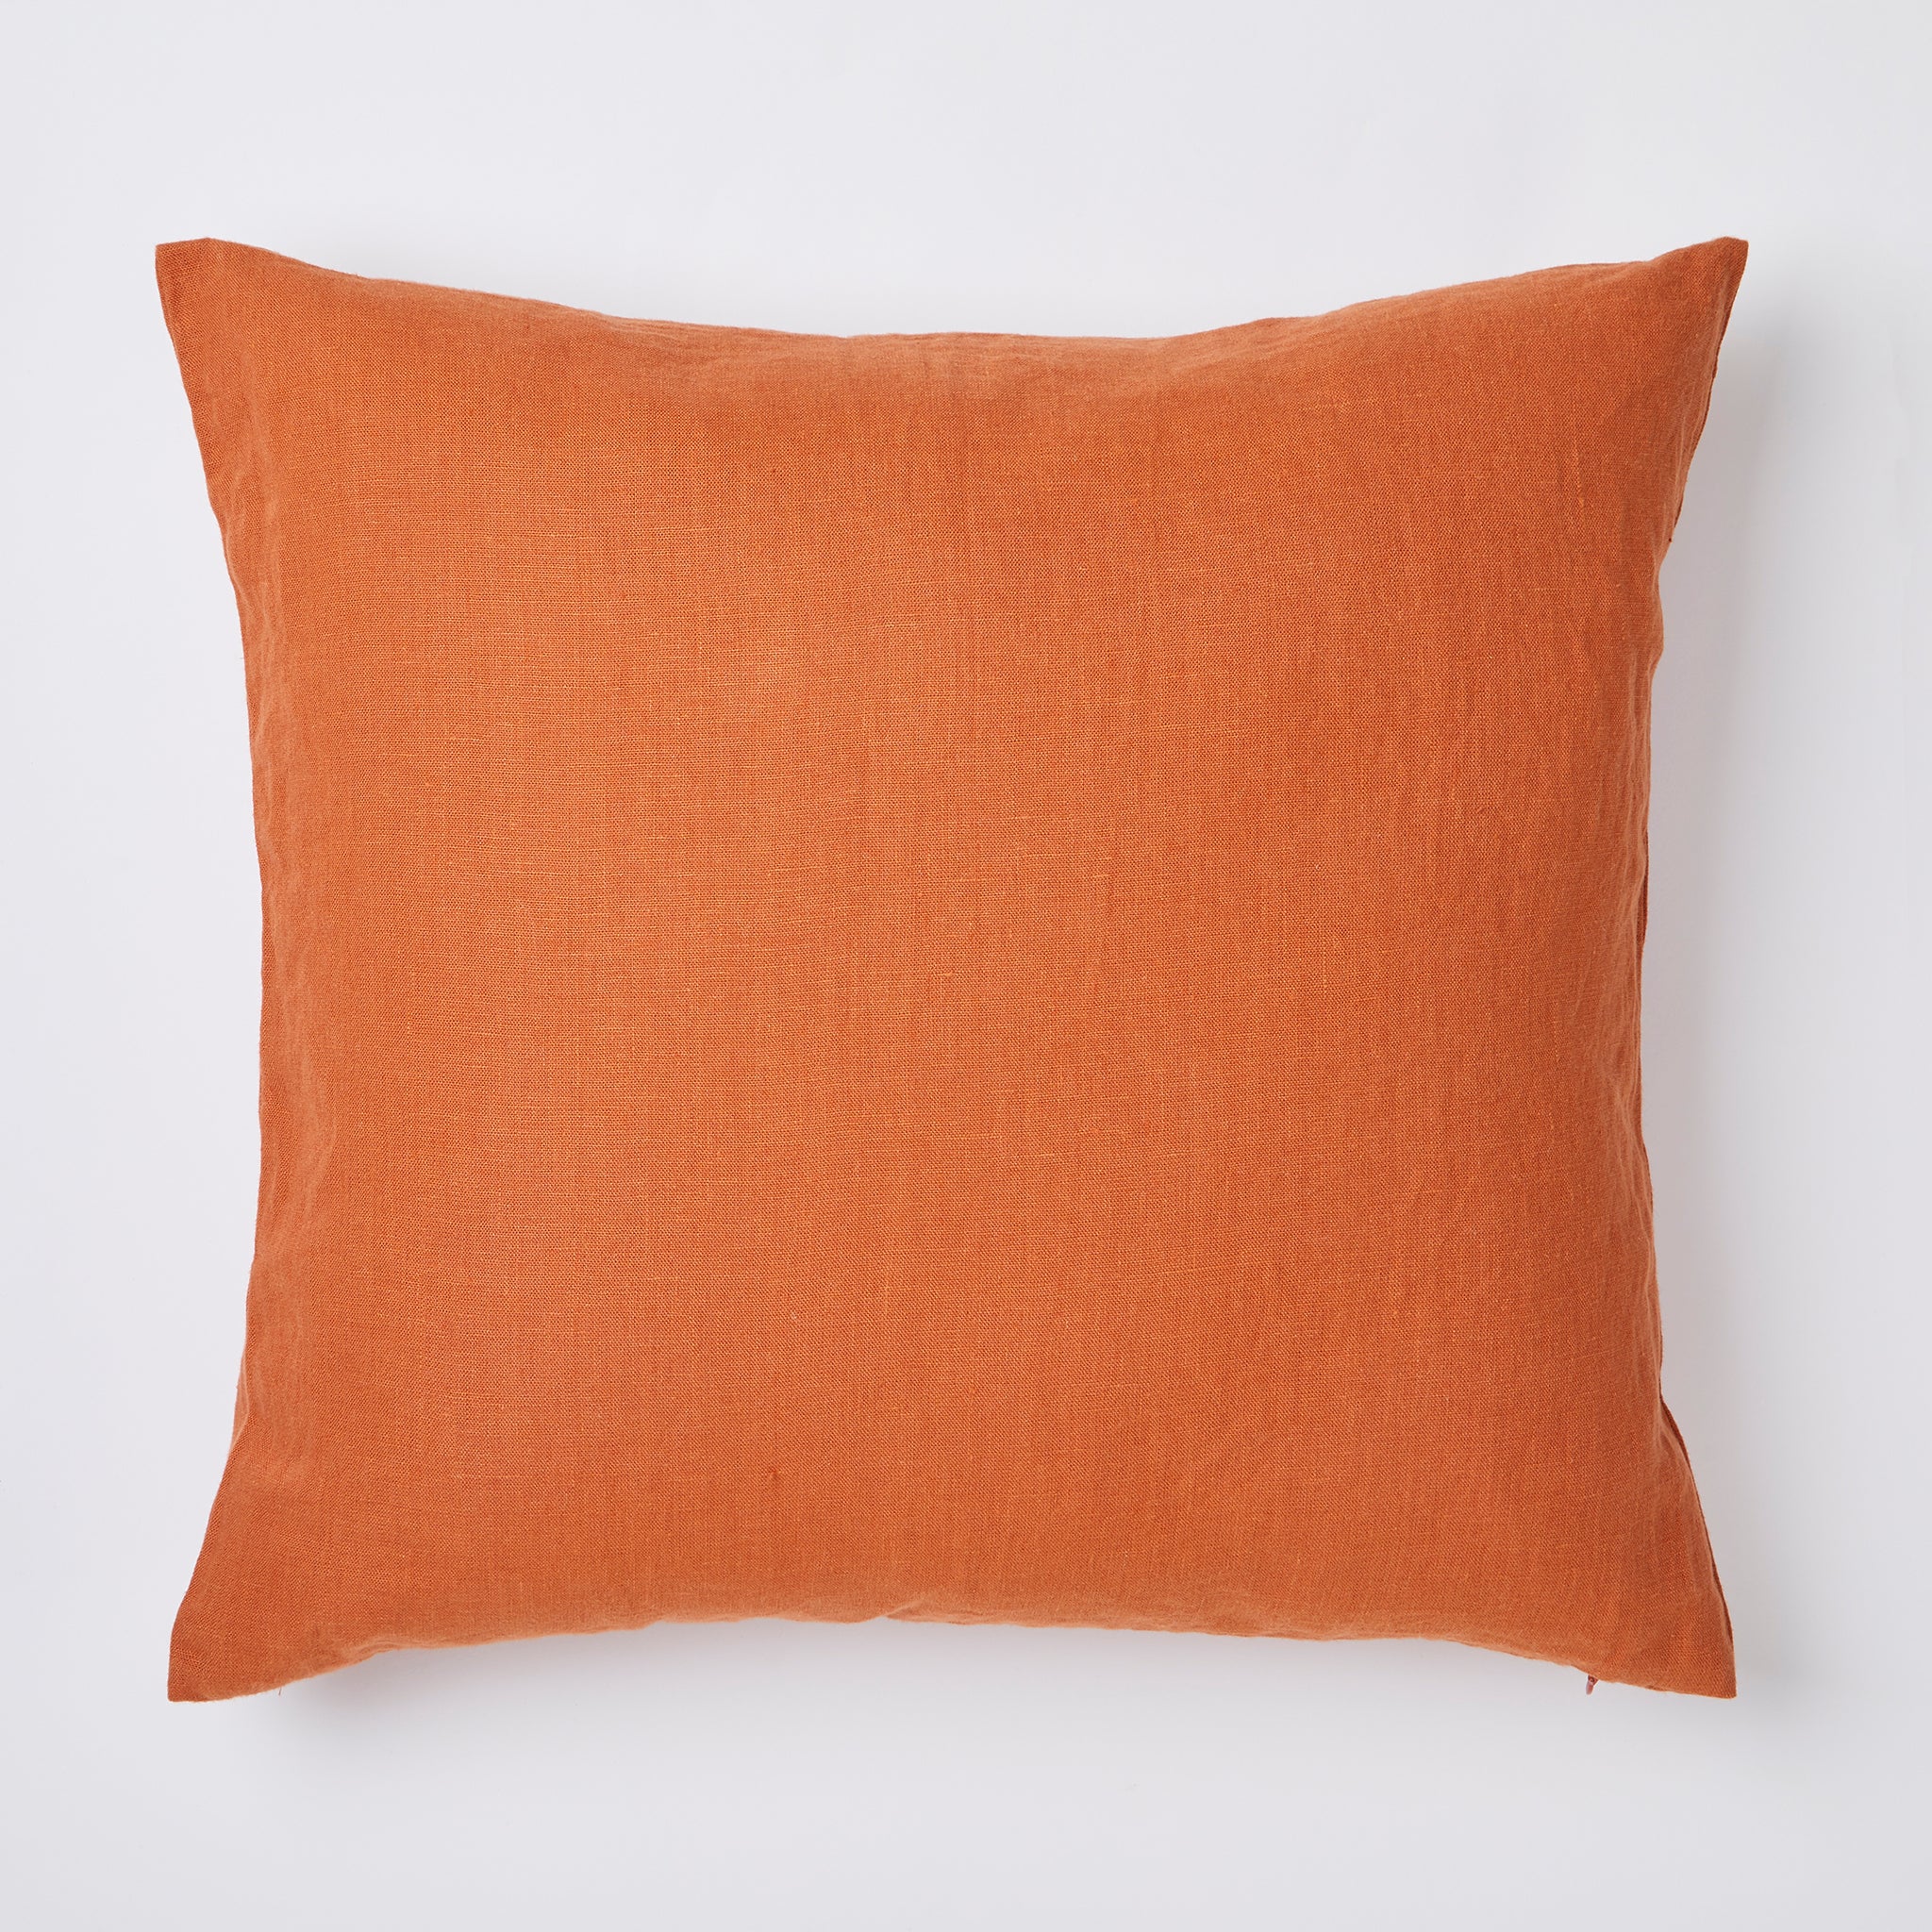 Linen cushion in color terra